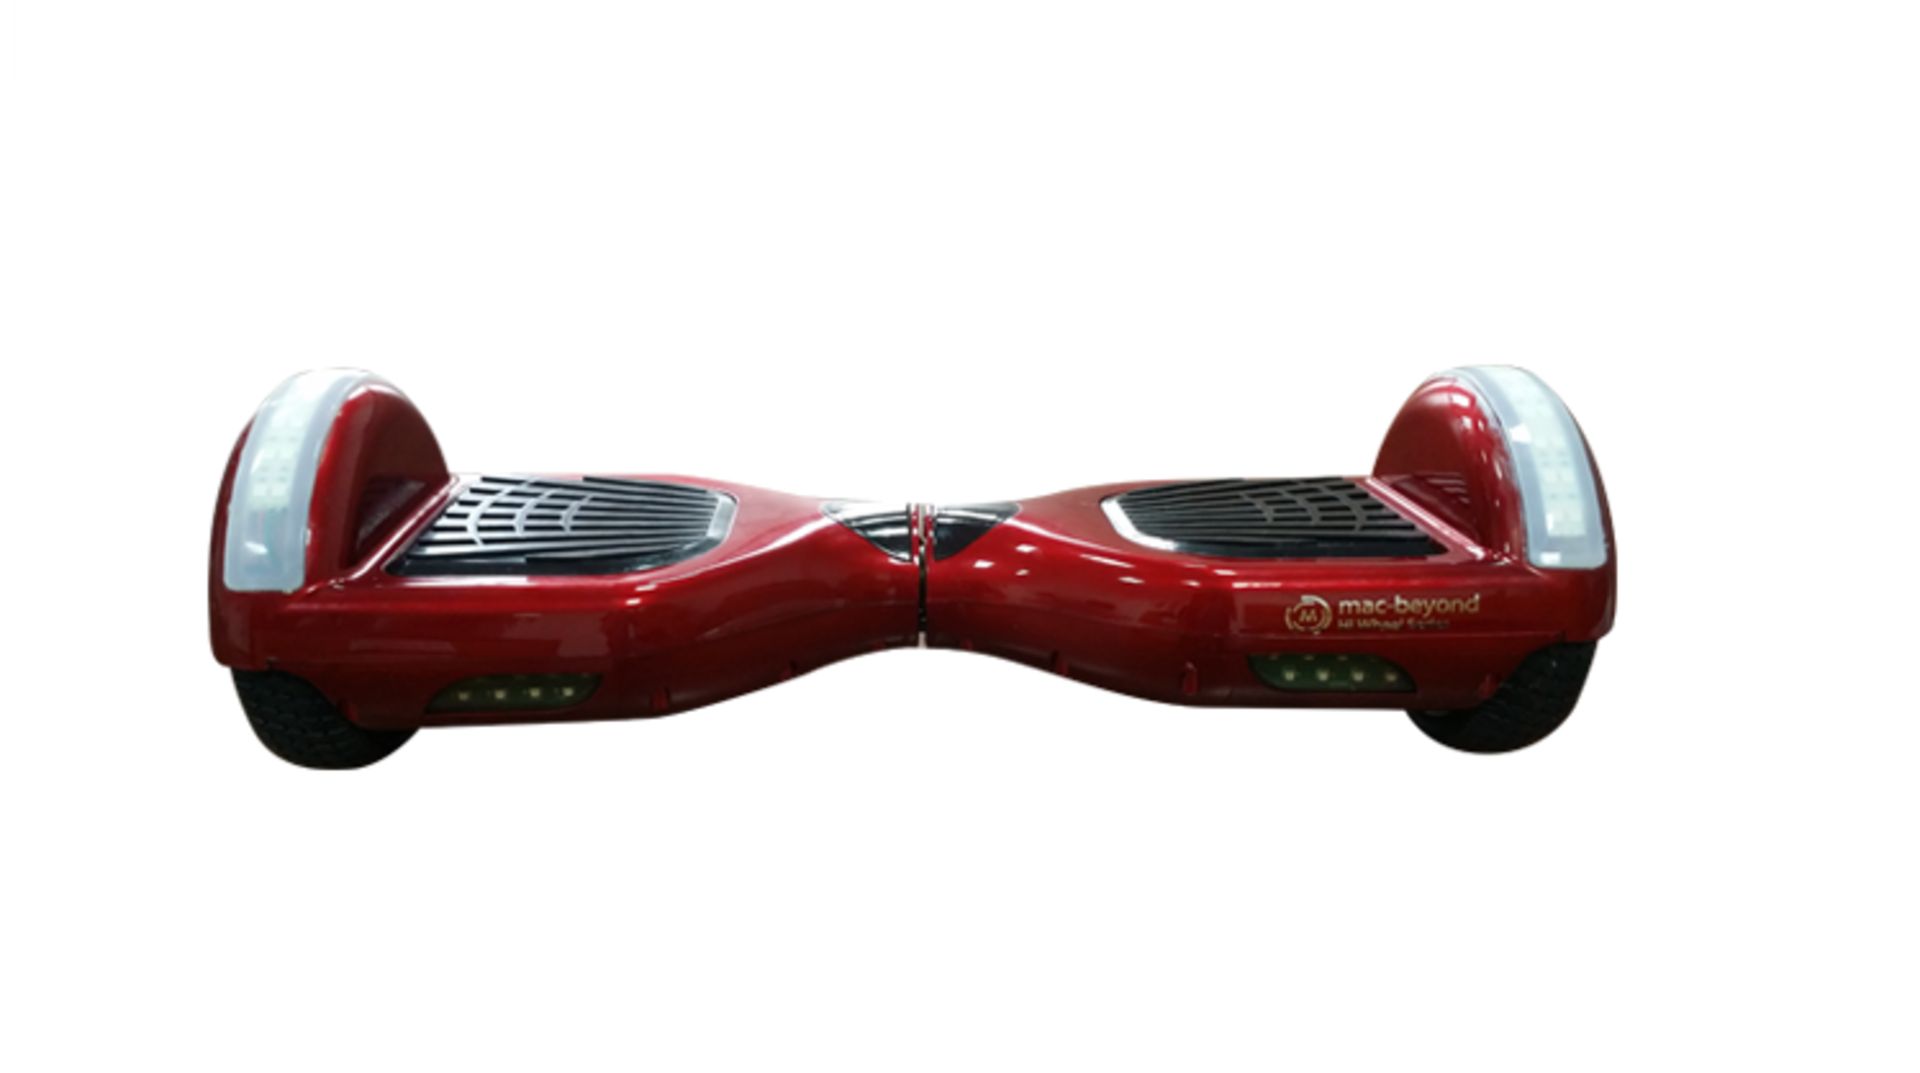 macbeyond x Hi wheel Series, Red Model Name: R2 LED (6.5 inch wheels, Best Seller) Smart personal - Image 2 of 7